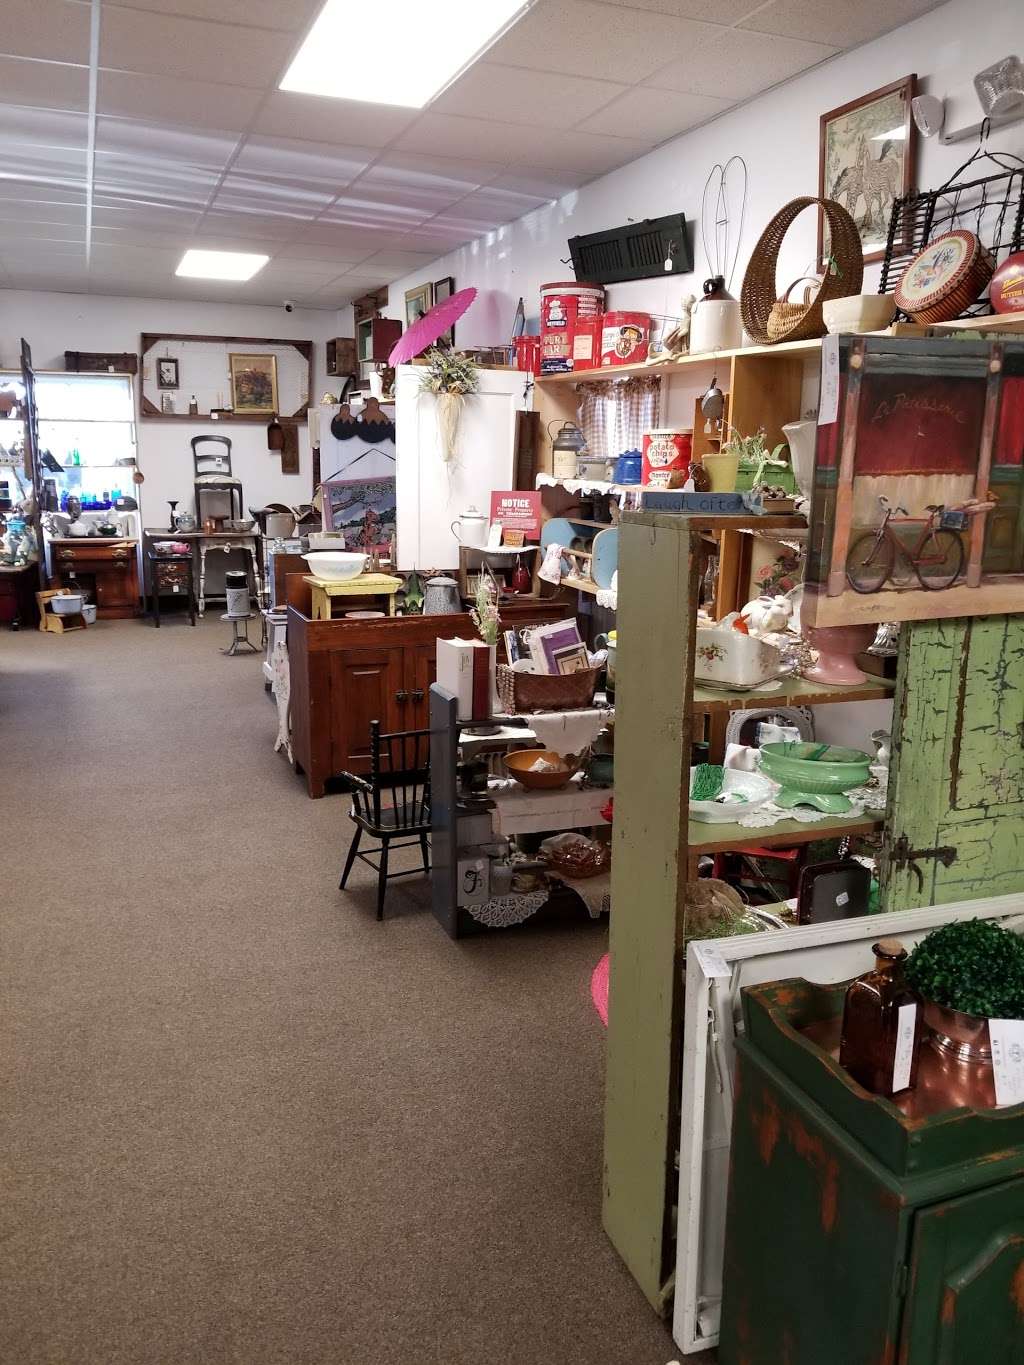 Barn Fresh Vintage Market | 311 County Line Rd, Gilbertsville, PA 19525 | Phone: (610) 473-0080